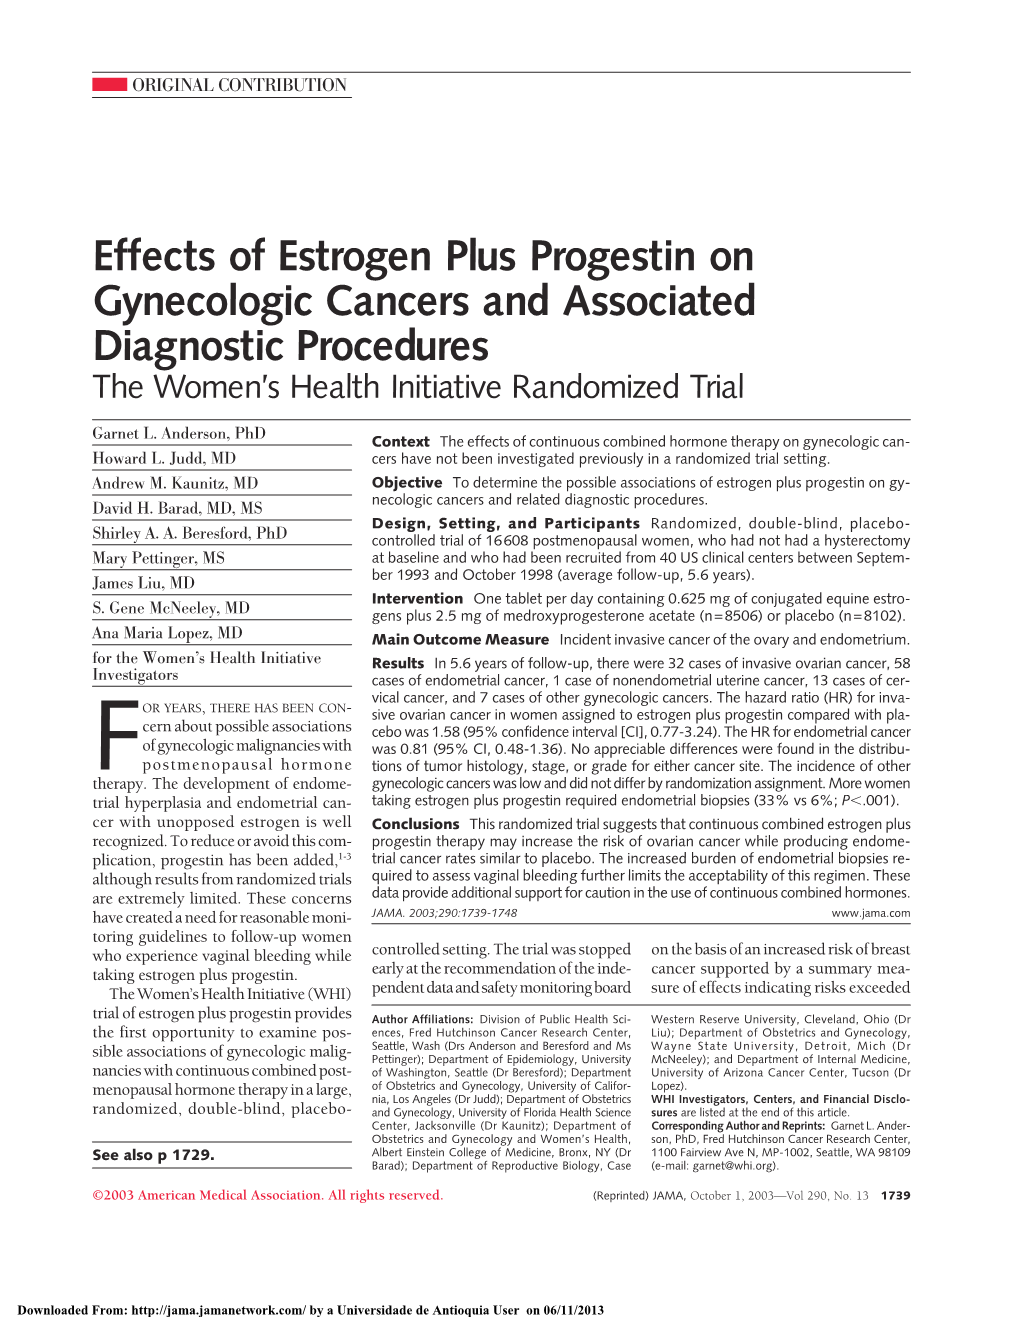 Effects of Estrogen Plus Progestin on Gynecologic Cancers and Associated Diagnostic Procedures the Women’S Health Initiative Randomized Trial